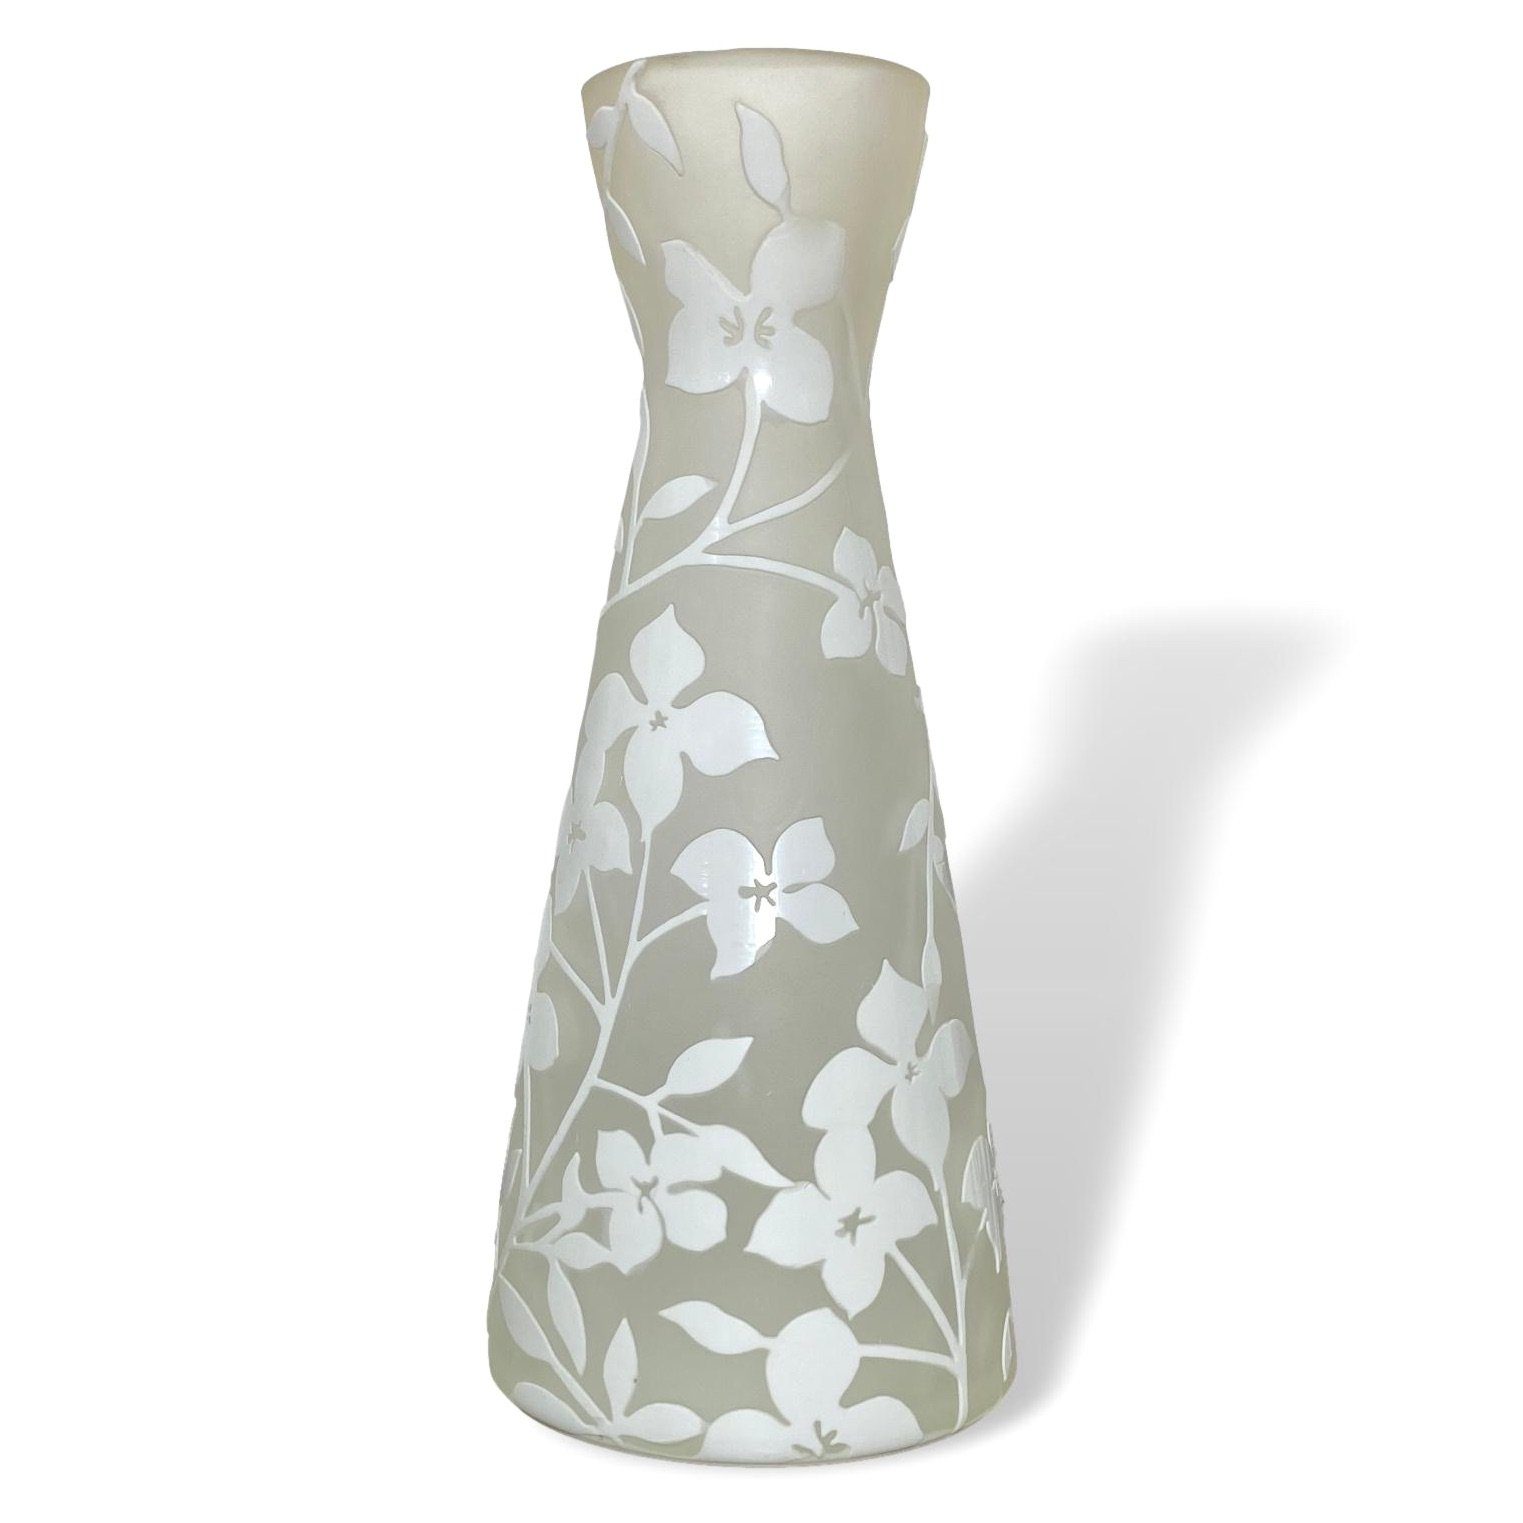 Aubaho Tischvase »Glasvase Glas Blumen Vase Antik-Stil 30cm Tischvase im  Stil des Nancy Jugendstil« online kaufen | OTTO